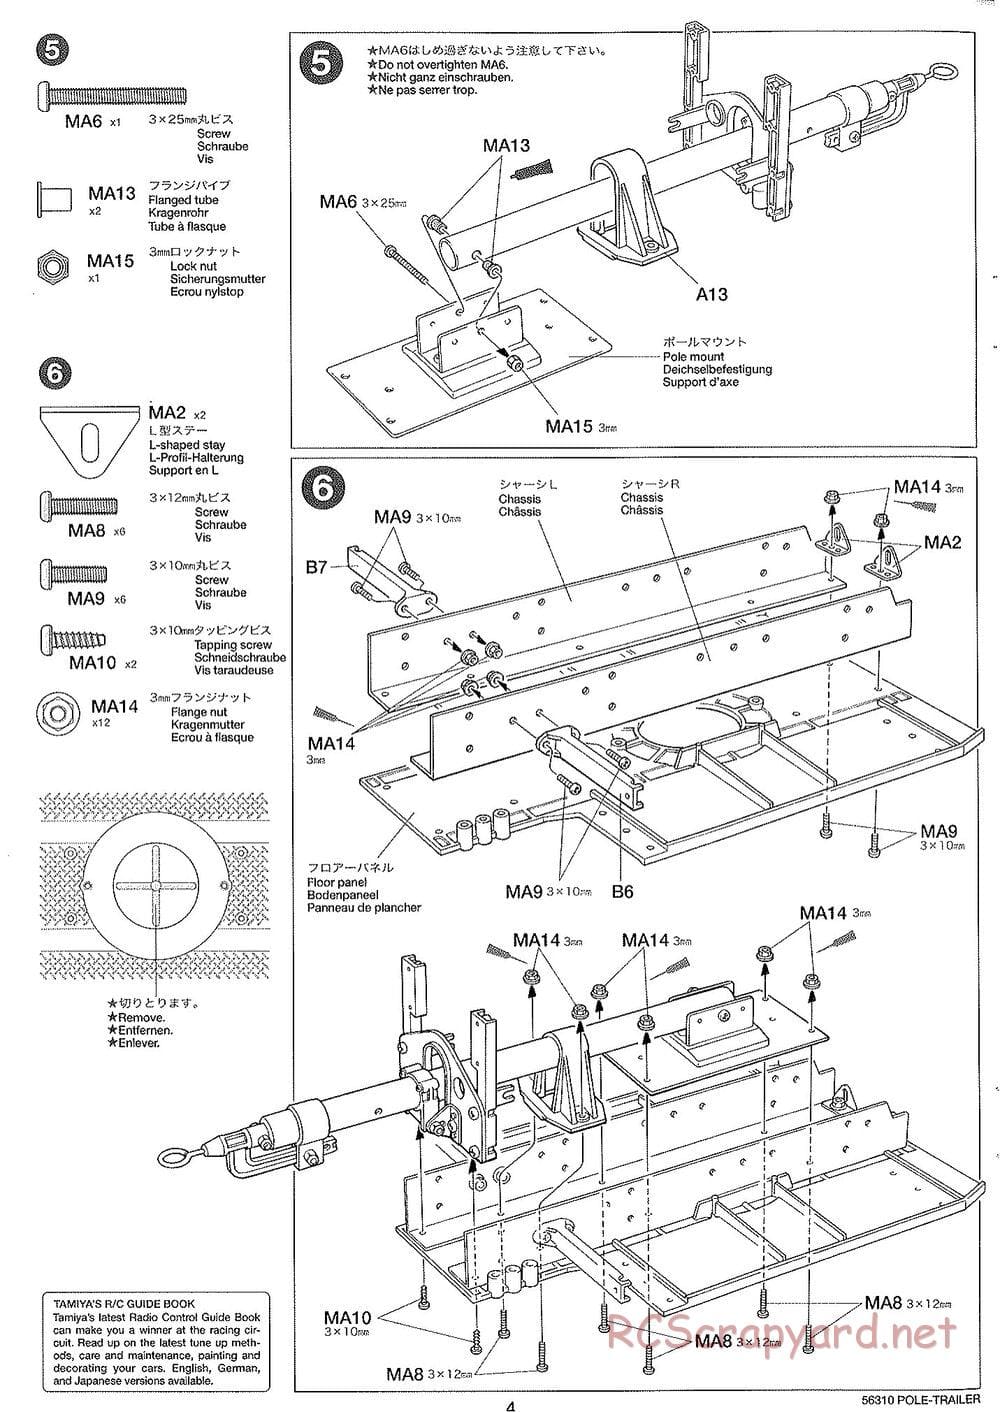 Tamiya - Semi Pole Trailer Chassis - Manual - Page 4